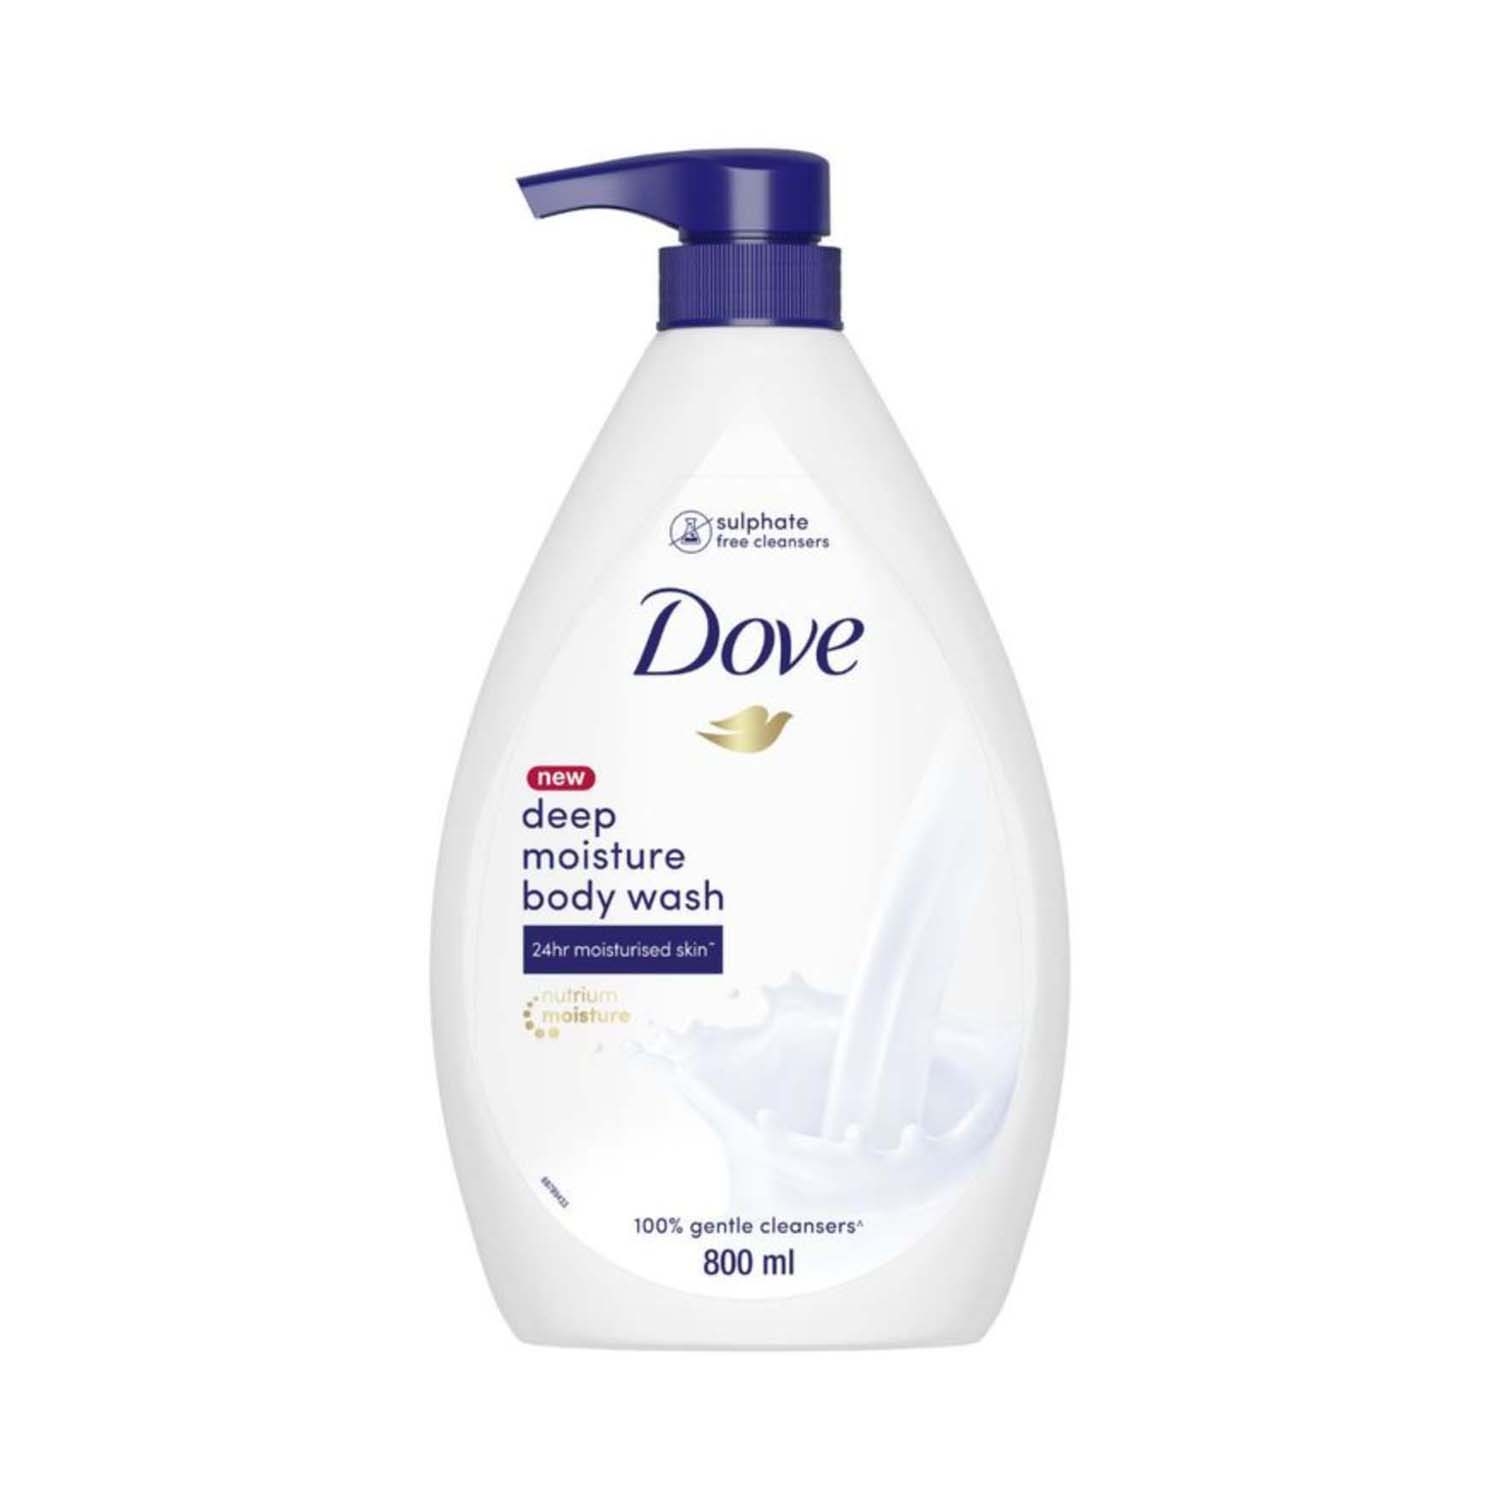 Dove Nourishing Care Body Wash with Argan Oil, 250 ml